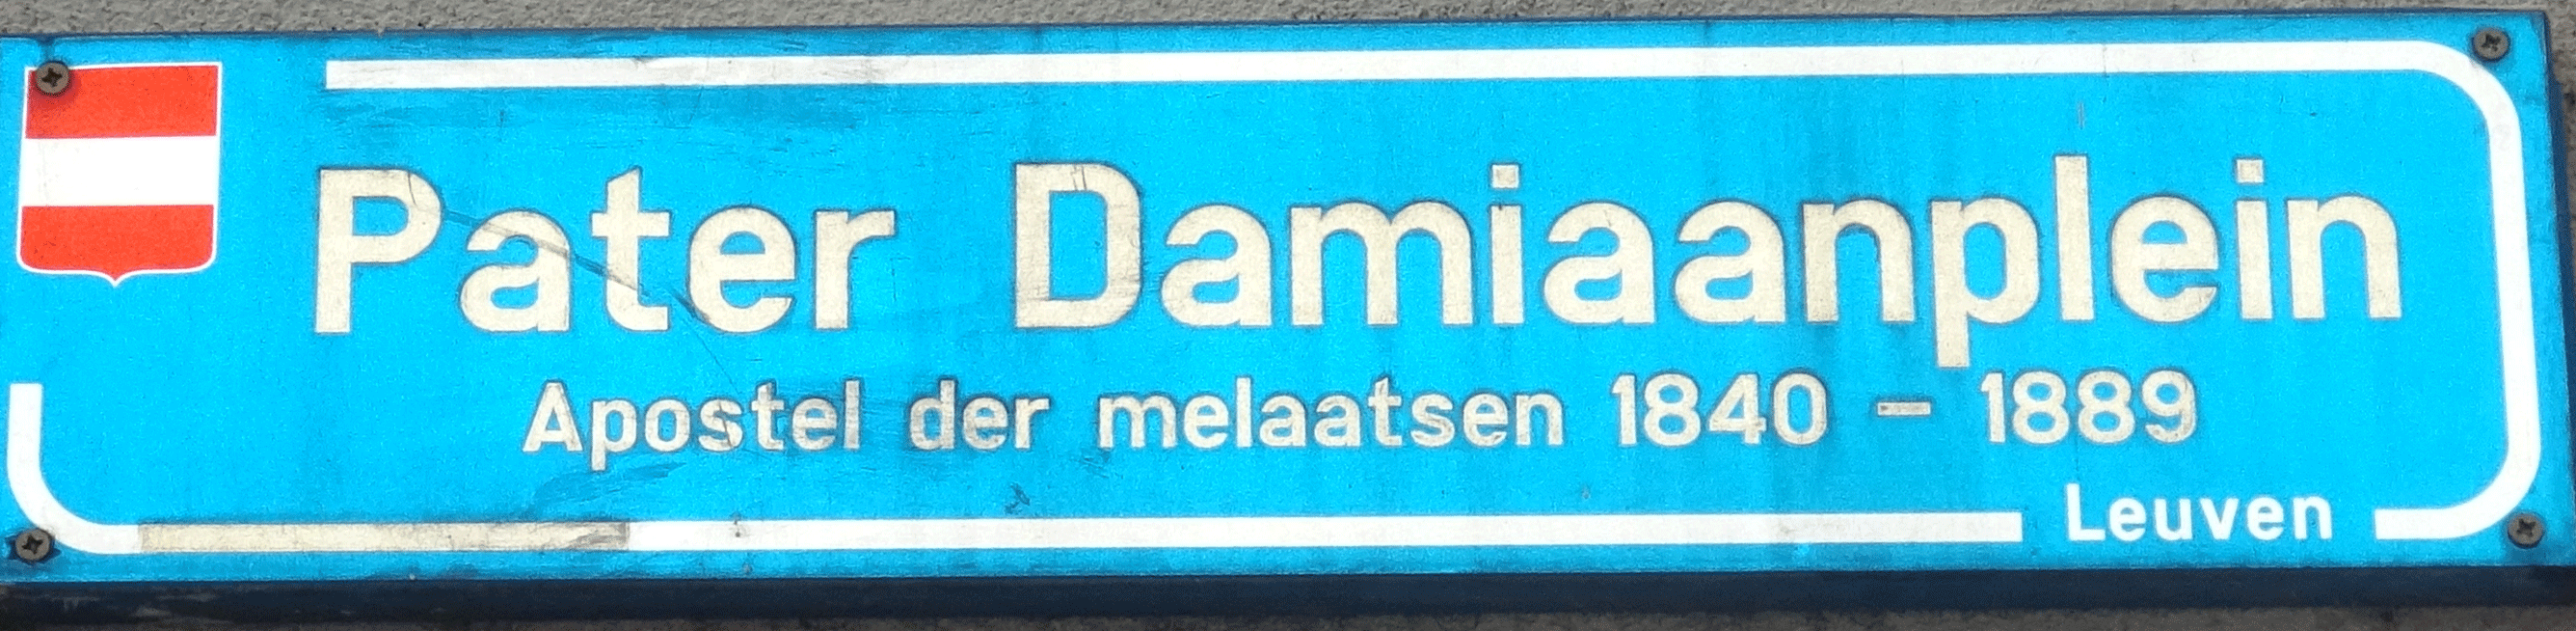 Damian Platz